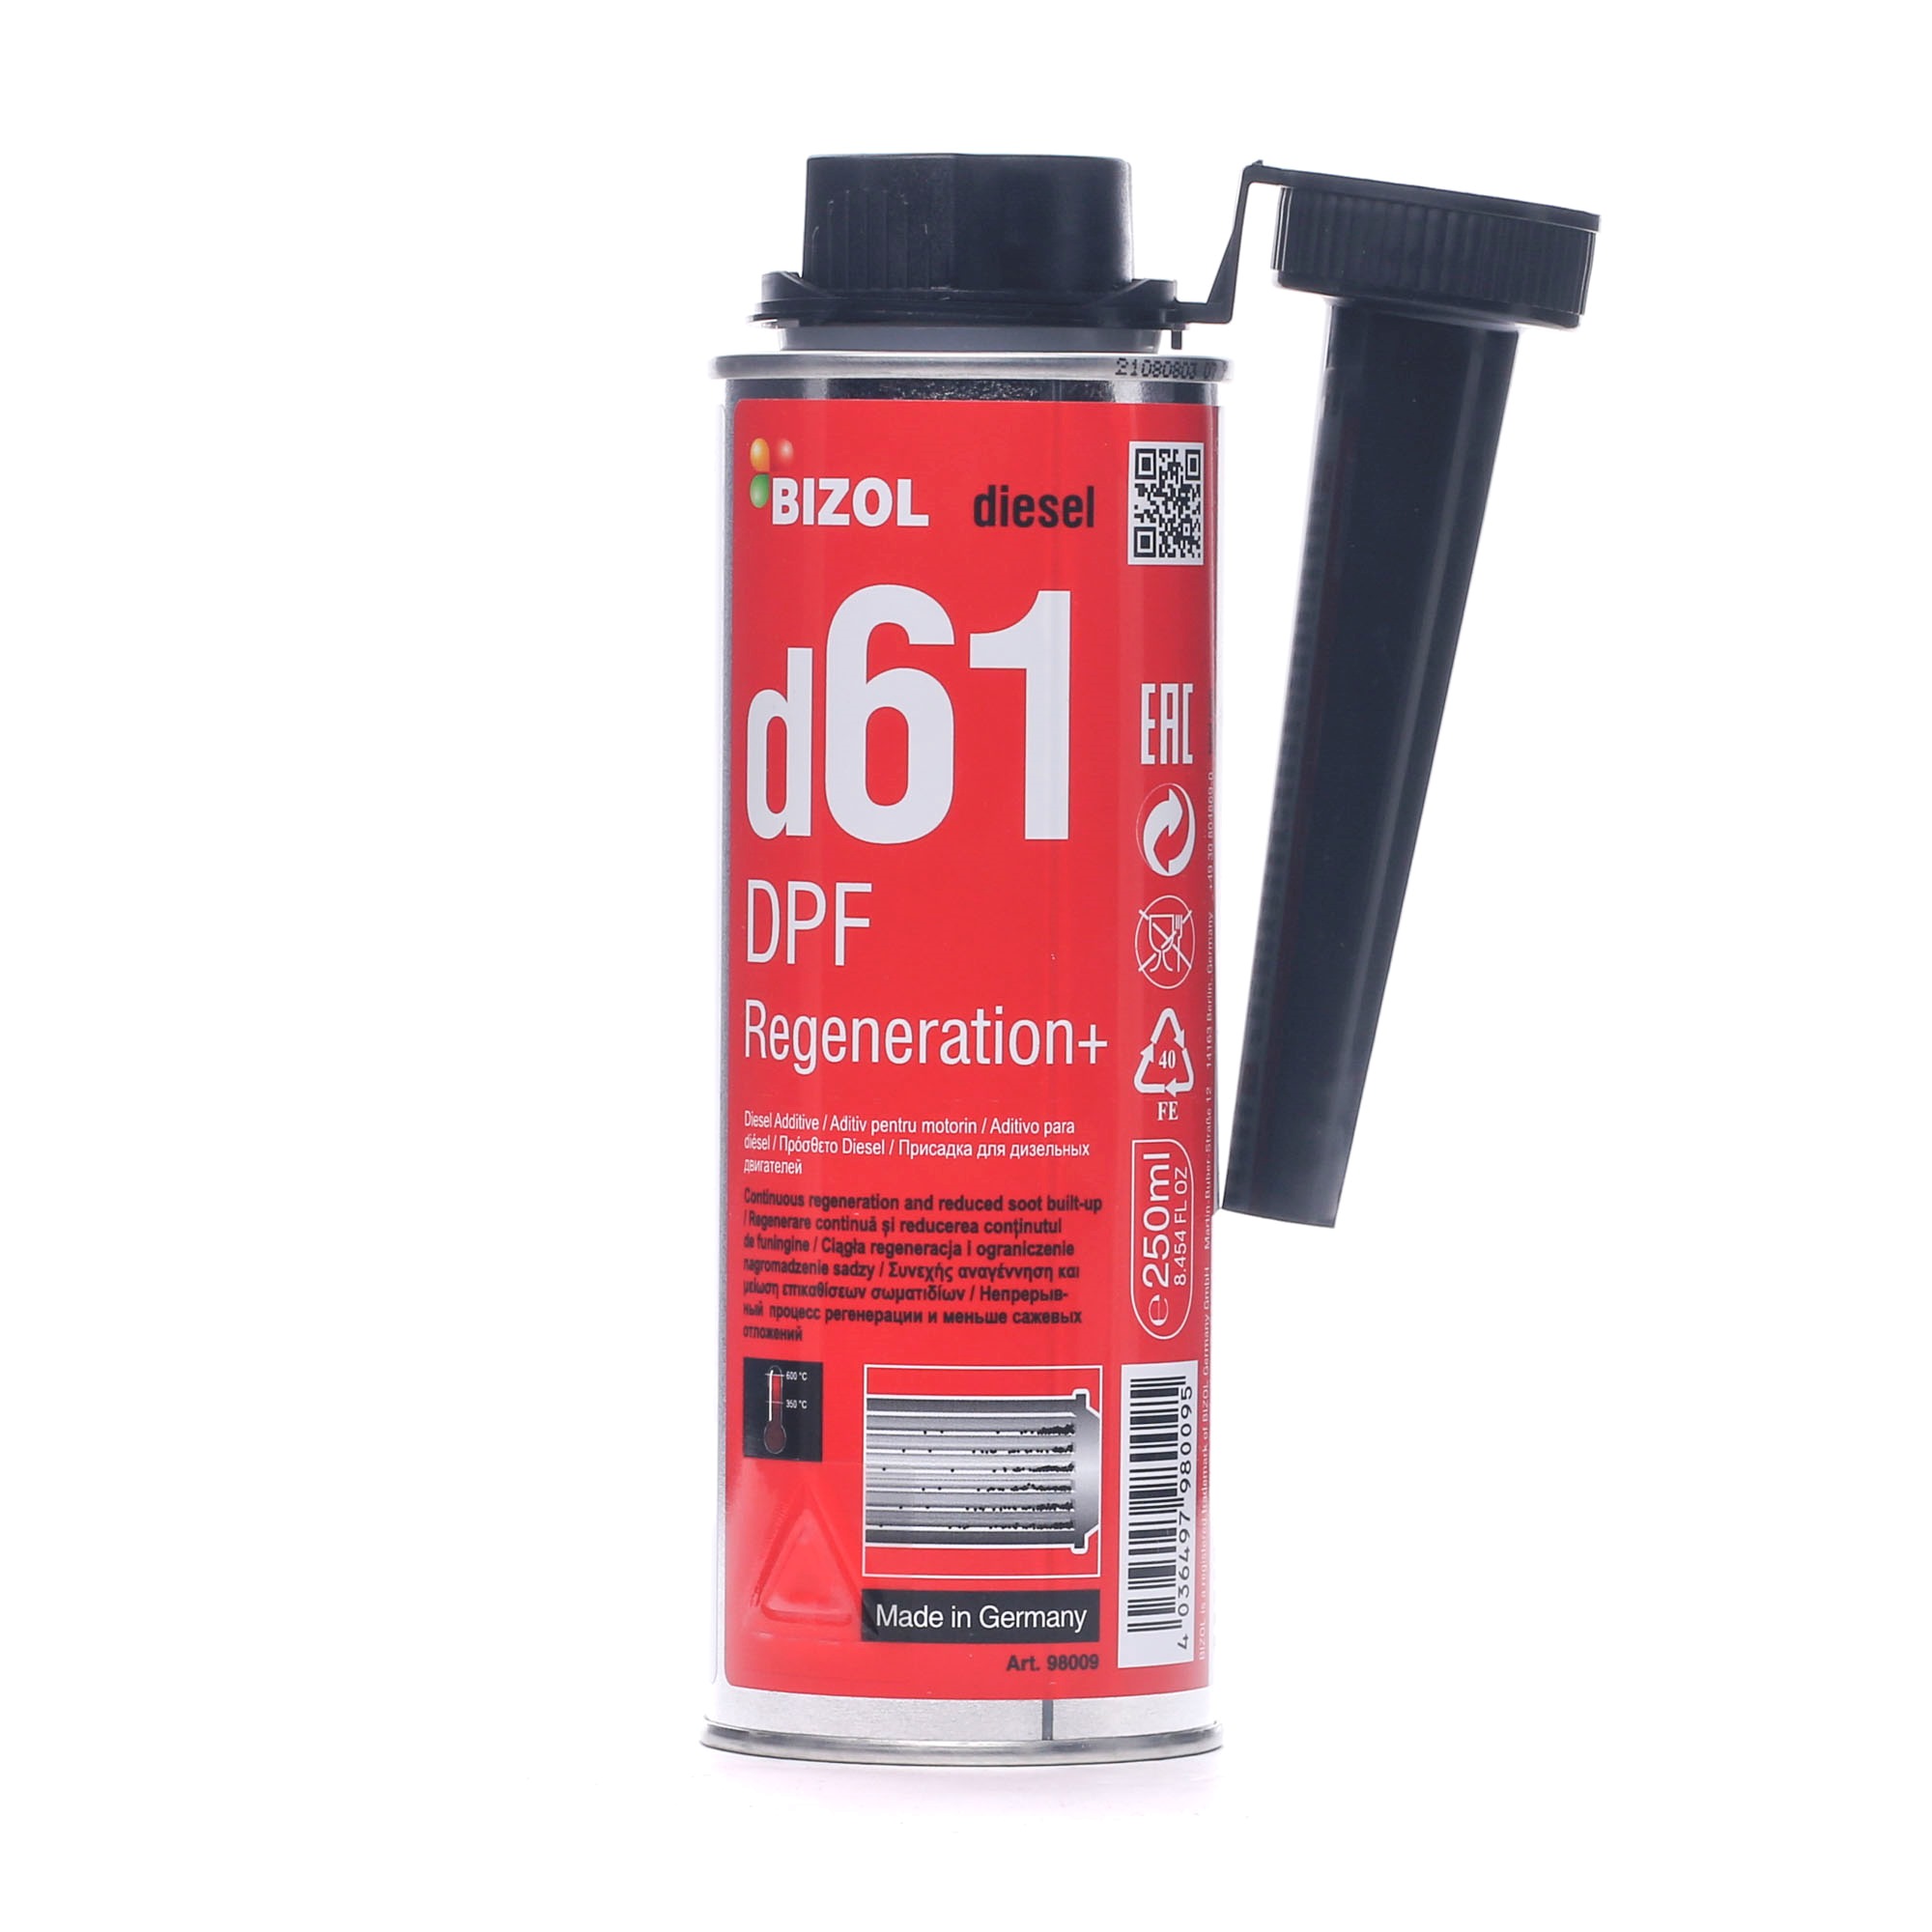 BIZOL DPF-Regeneration+, d61 Dieselpartikelfilter 8009